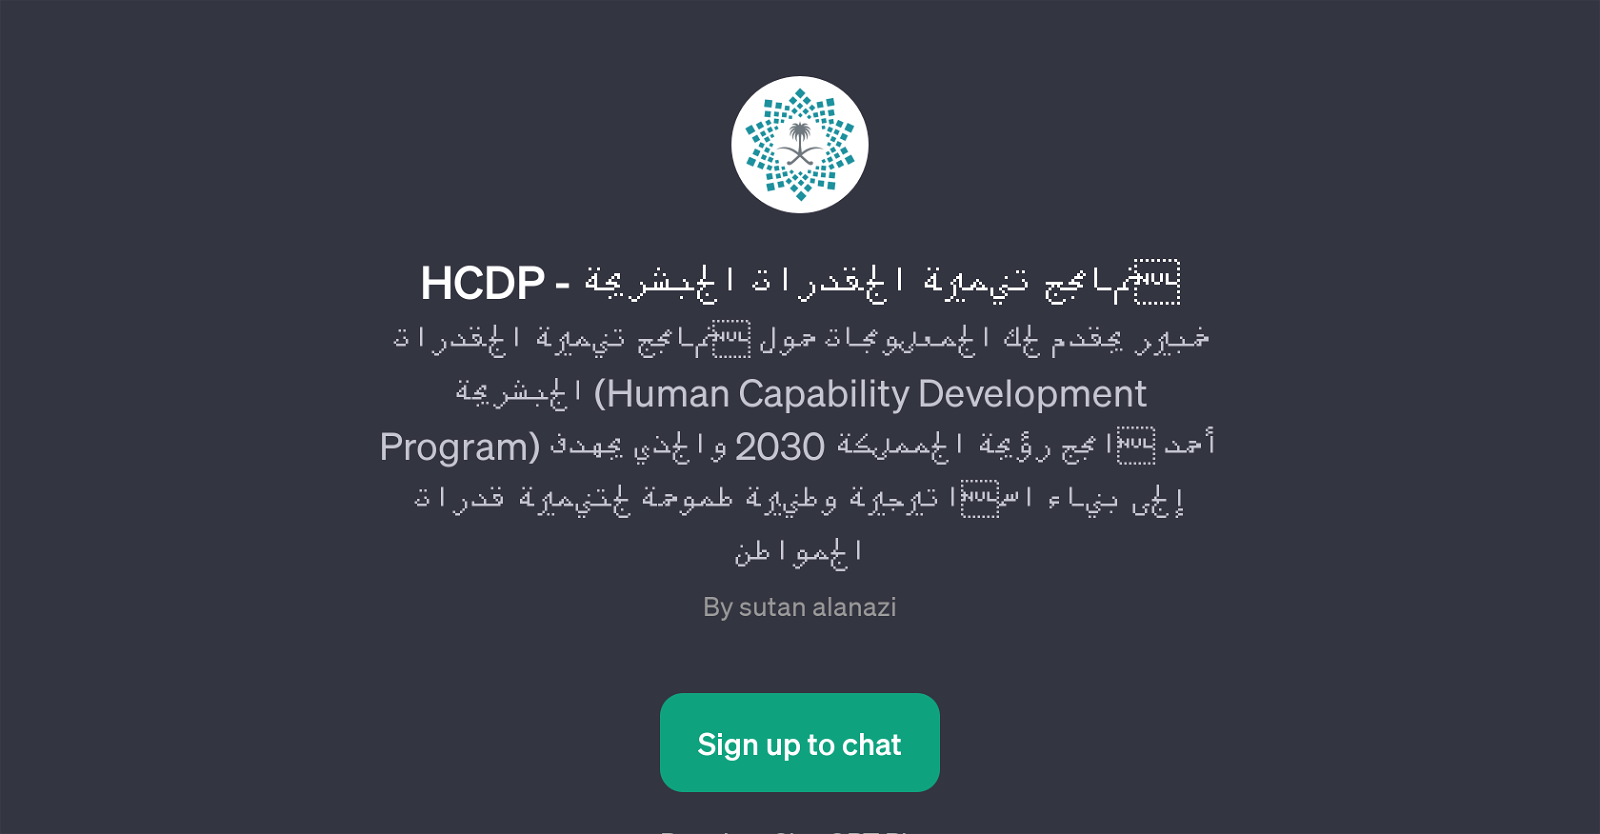 HCDP website